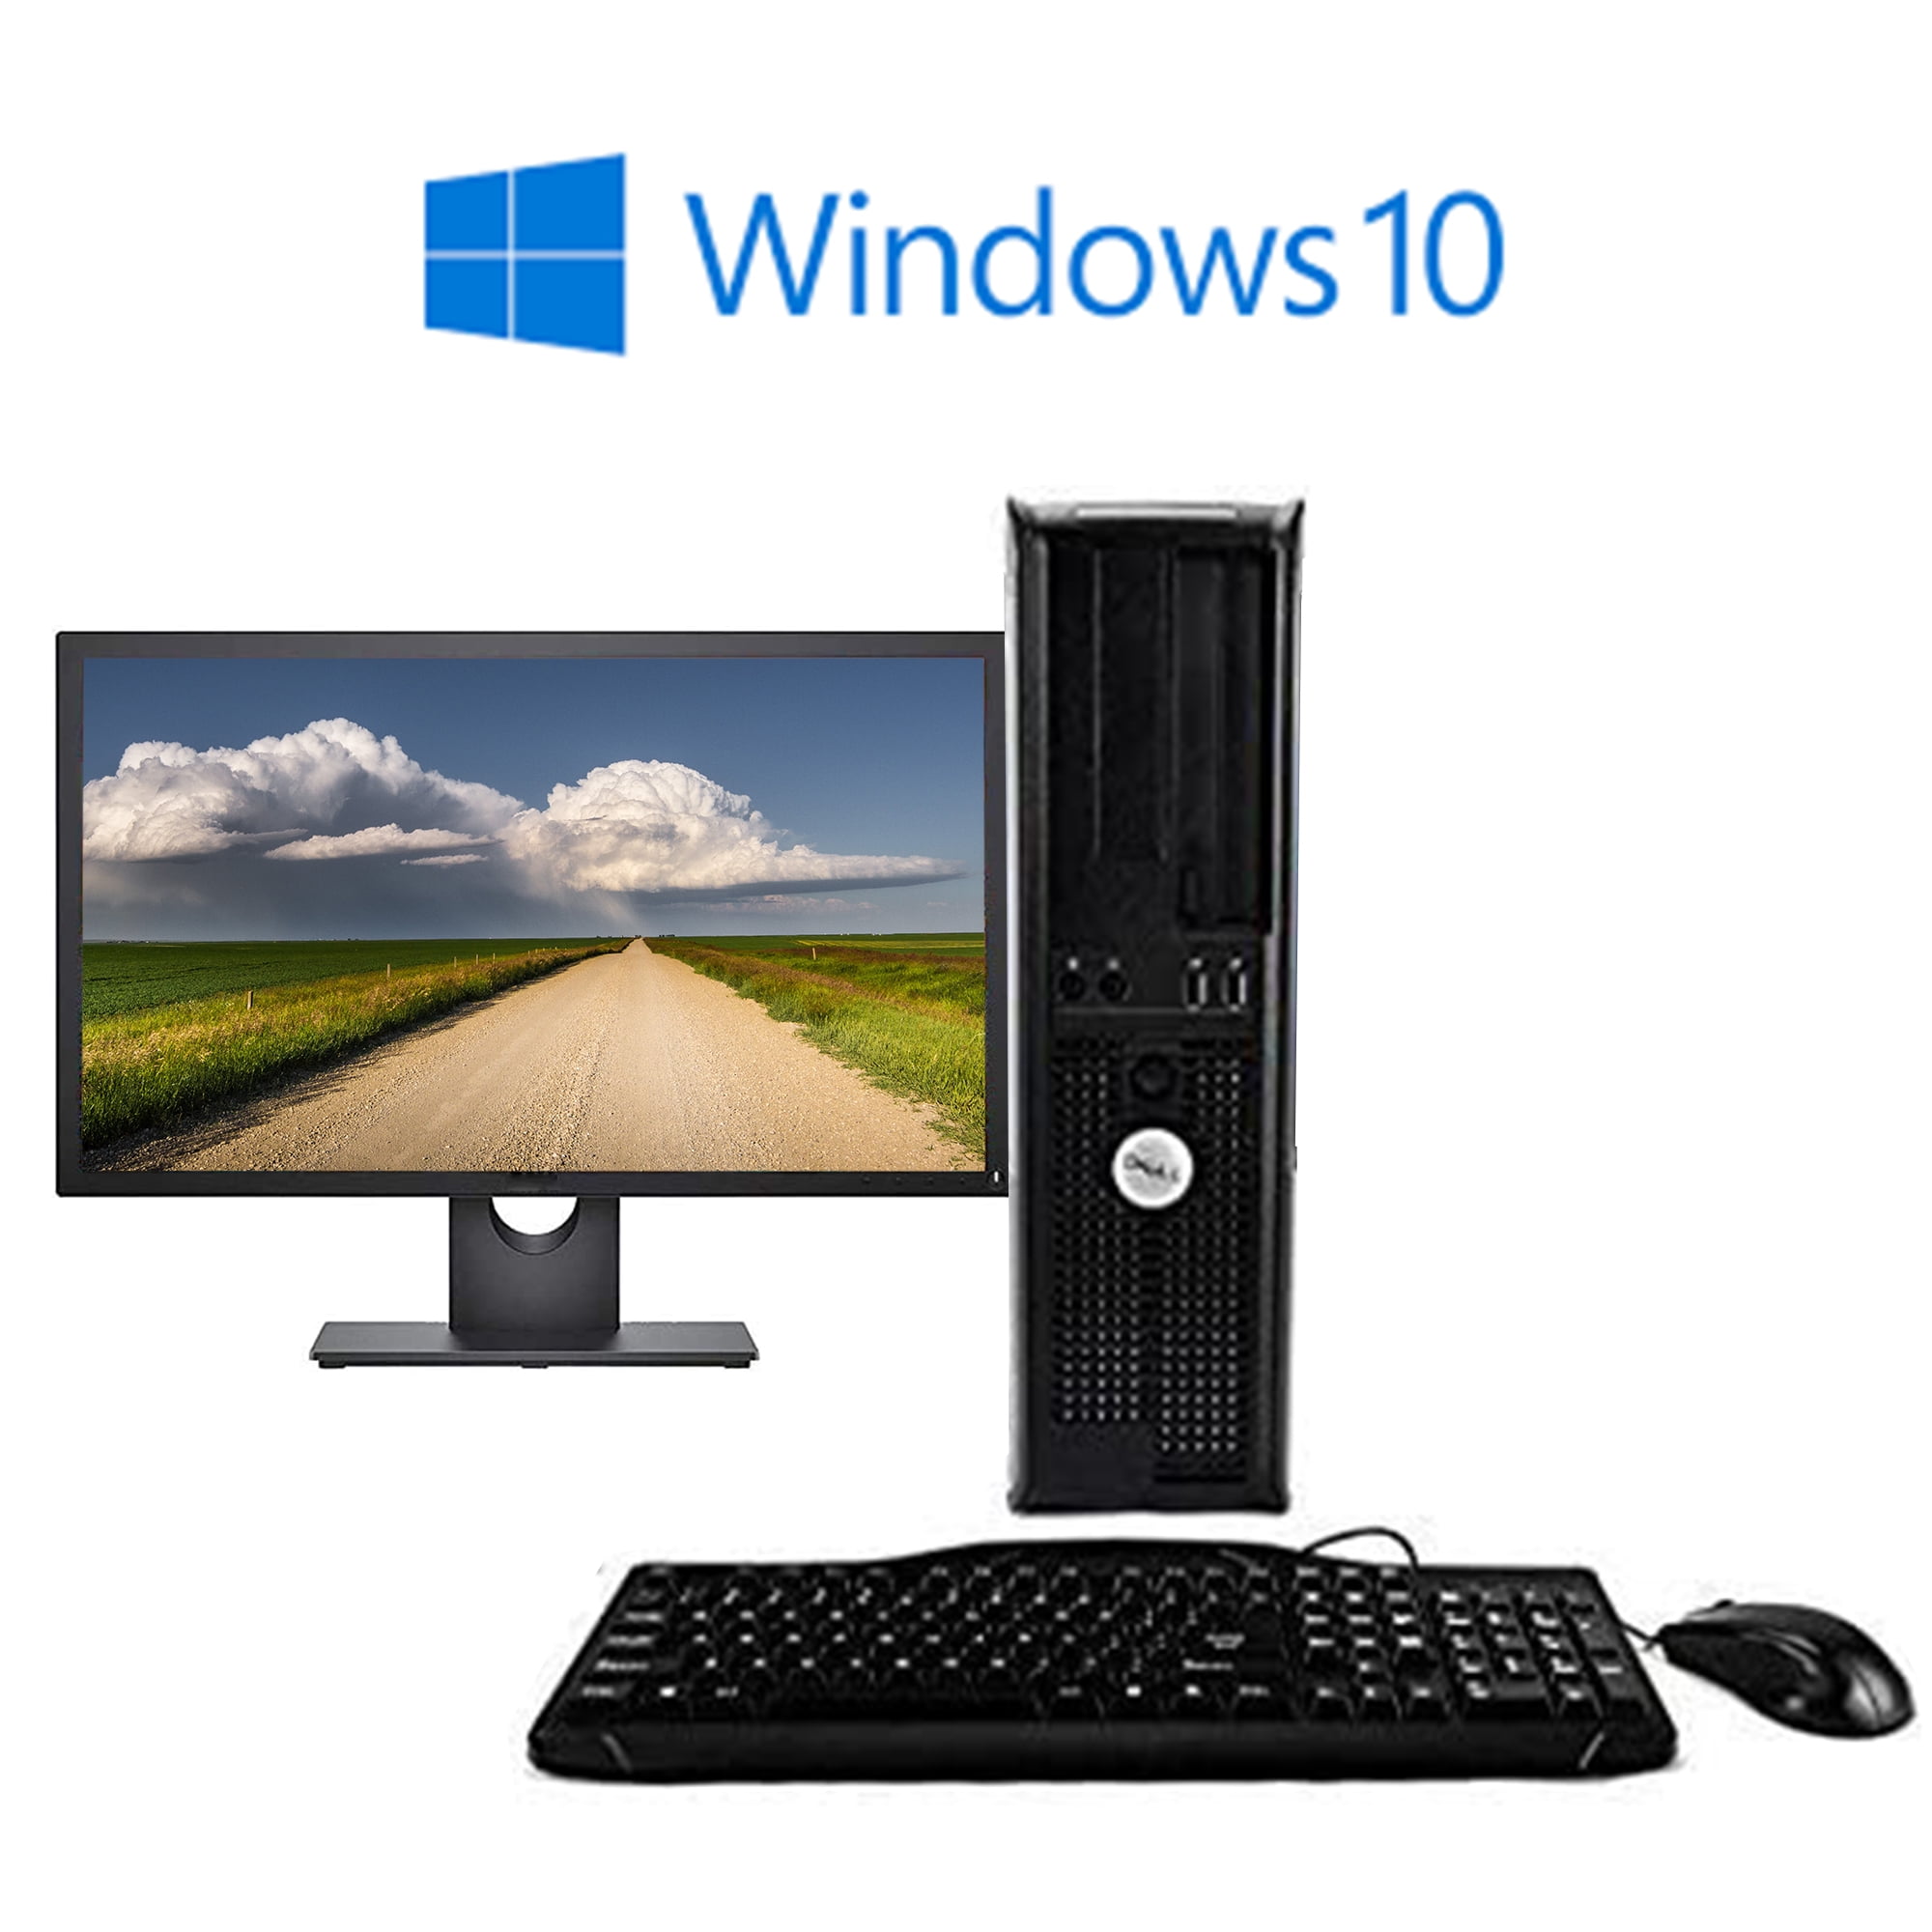 Dell Optiplex 780 Windows 10 Pro Premium Desktop PC Tower Core 2 Duo   Processor 16GB RAM 2TB Hard Drive DVD-RW Wifi with a 19